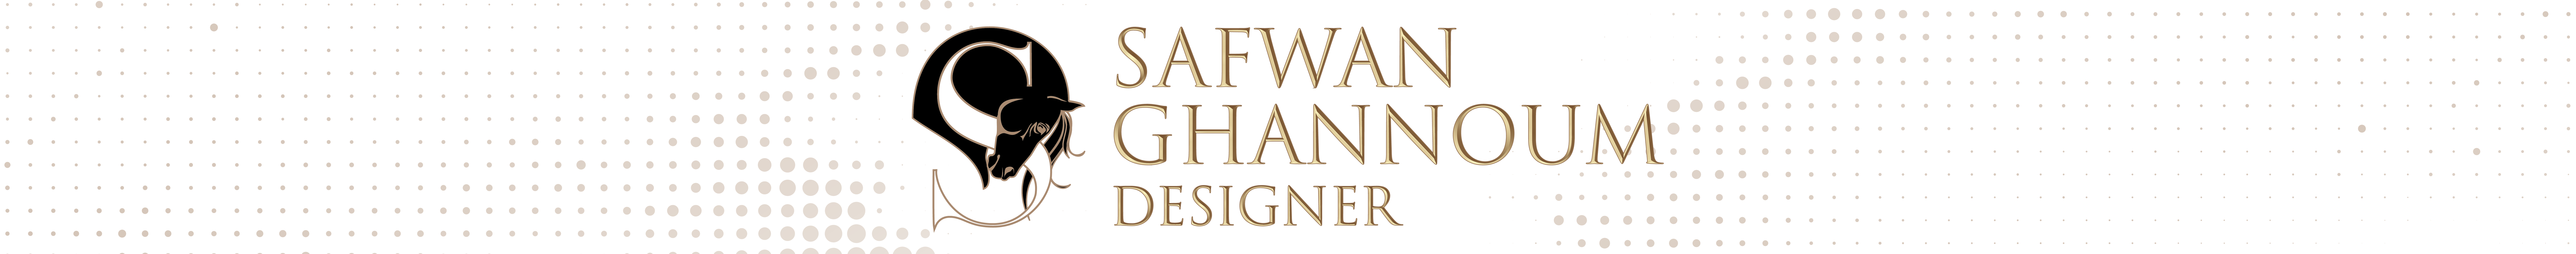 Safwan Ghannoum's profile banner